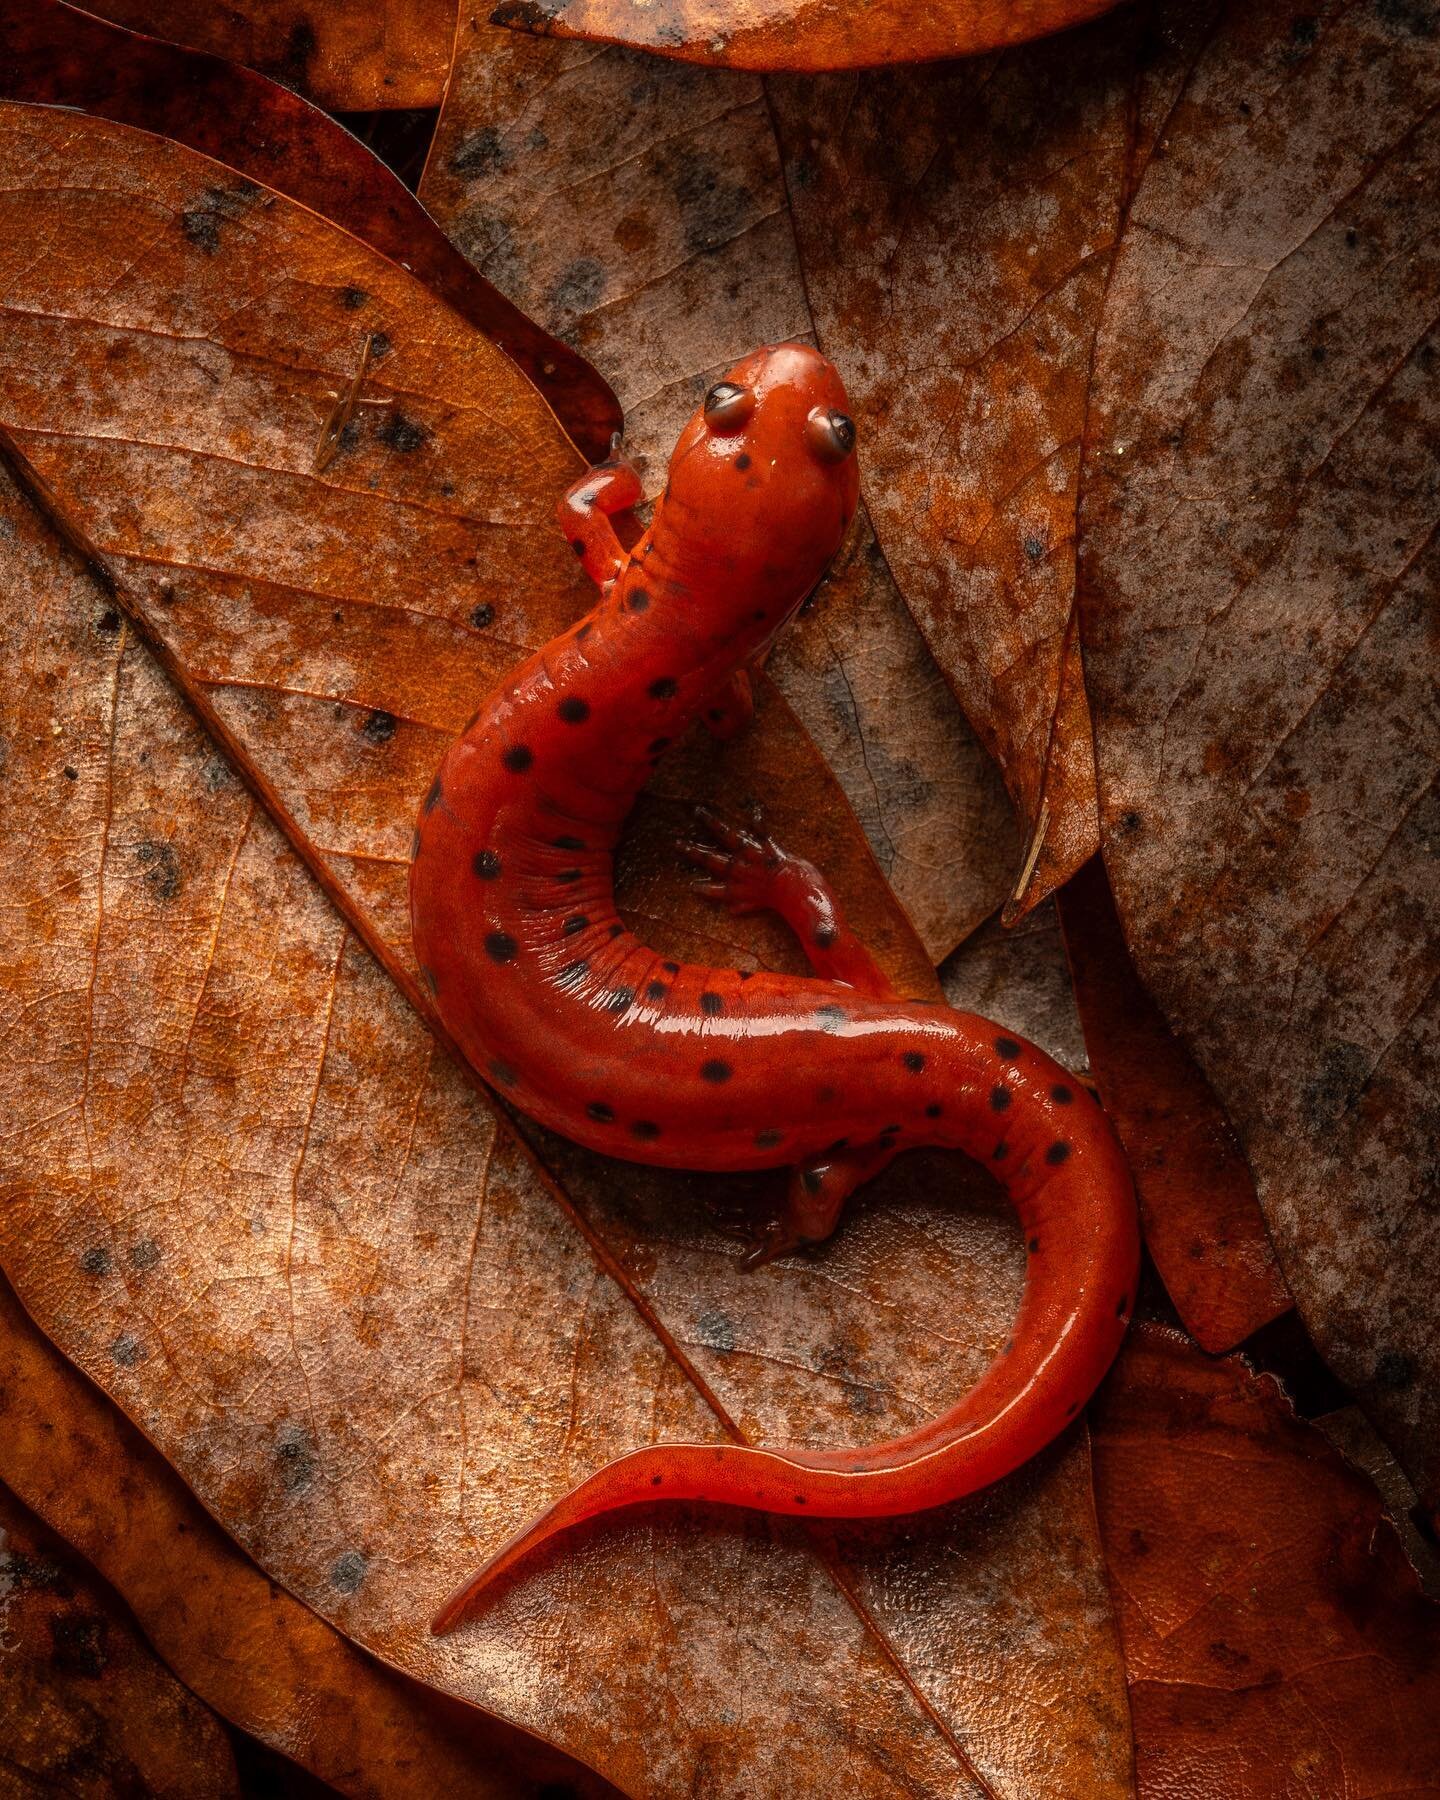 One of many mud salamanders from a rainy night in December. 

#herping #mudsalamander #pseudotriton #salamander #nature #wildlife #photography #wildlifephotography #sony #sonyalpha